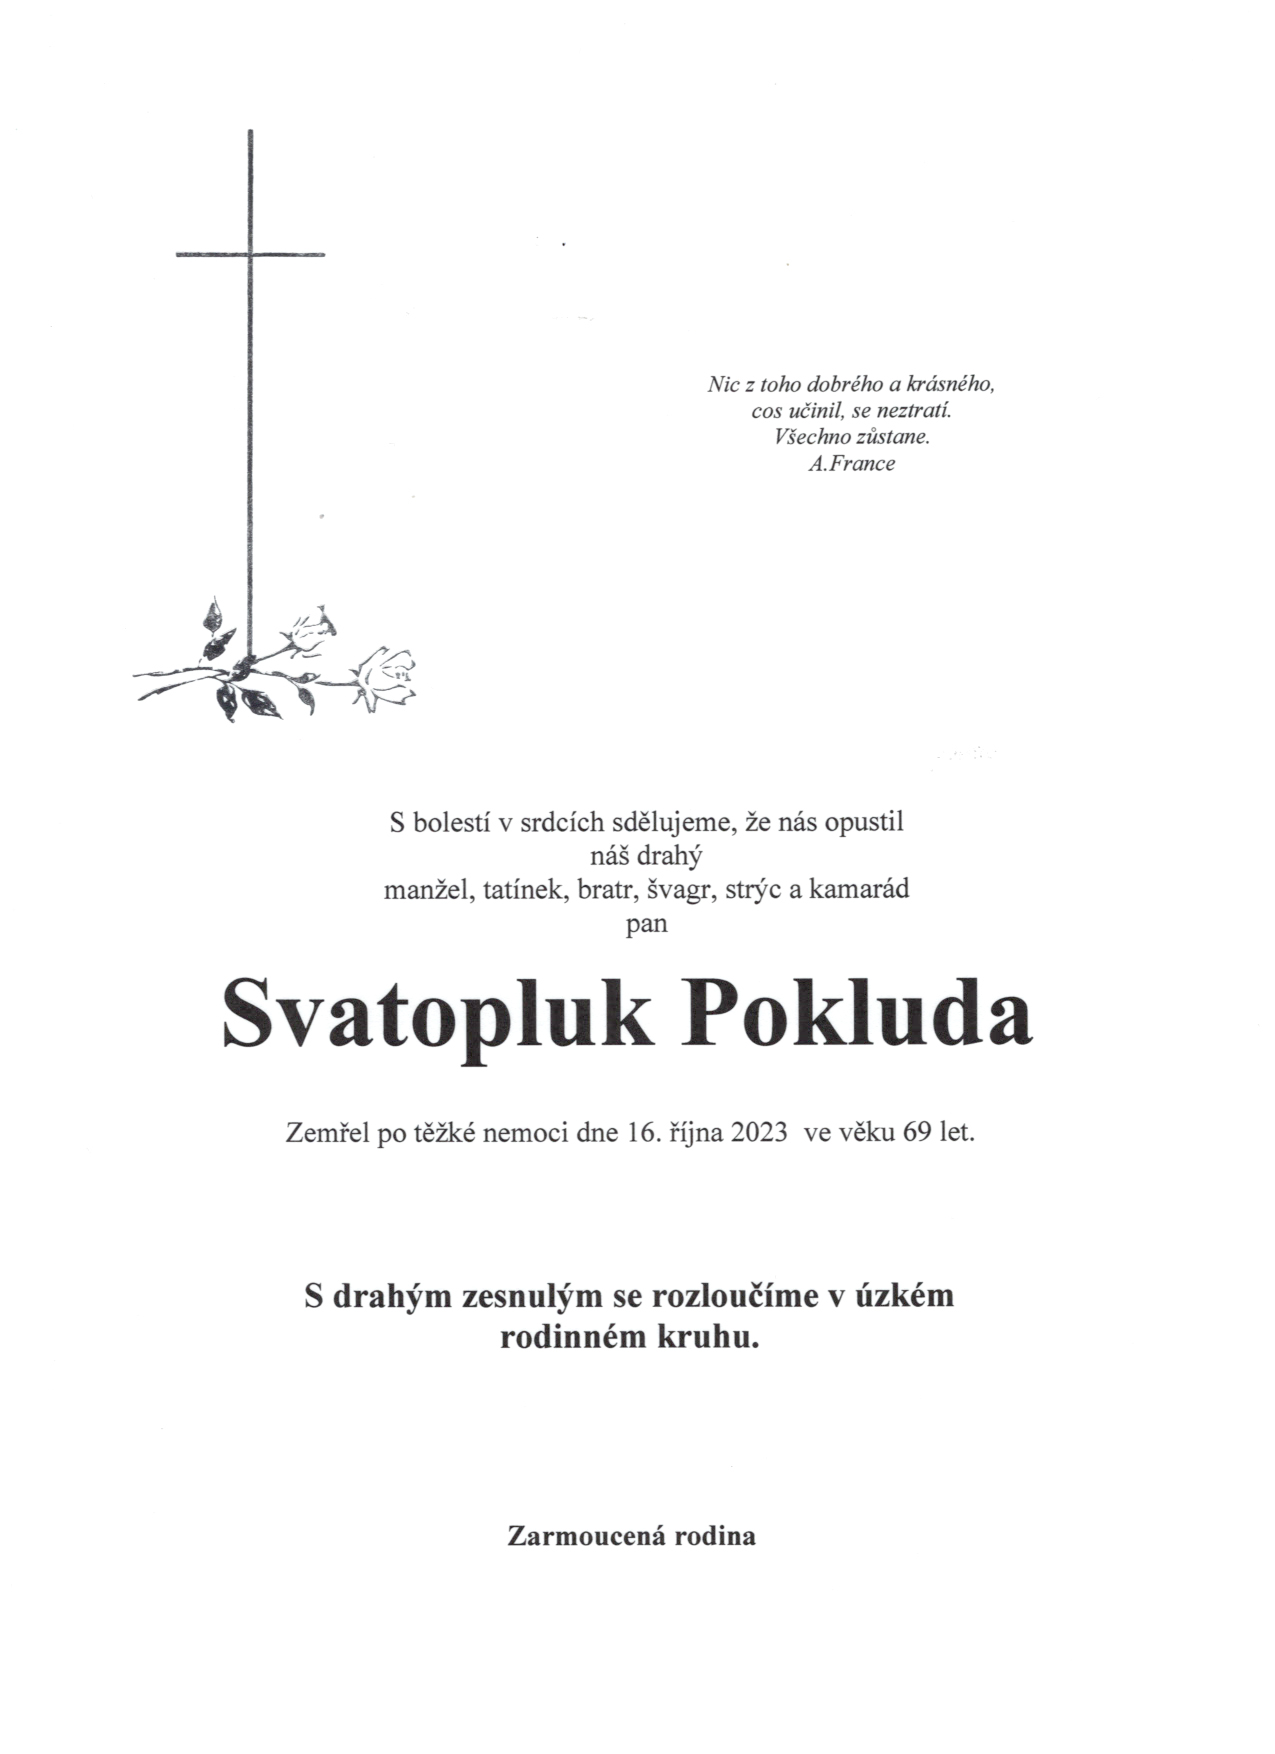 Parte Pokluda Svatopluk